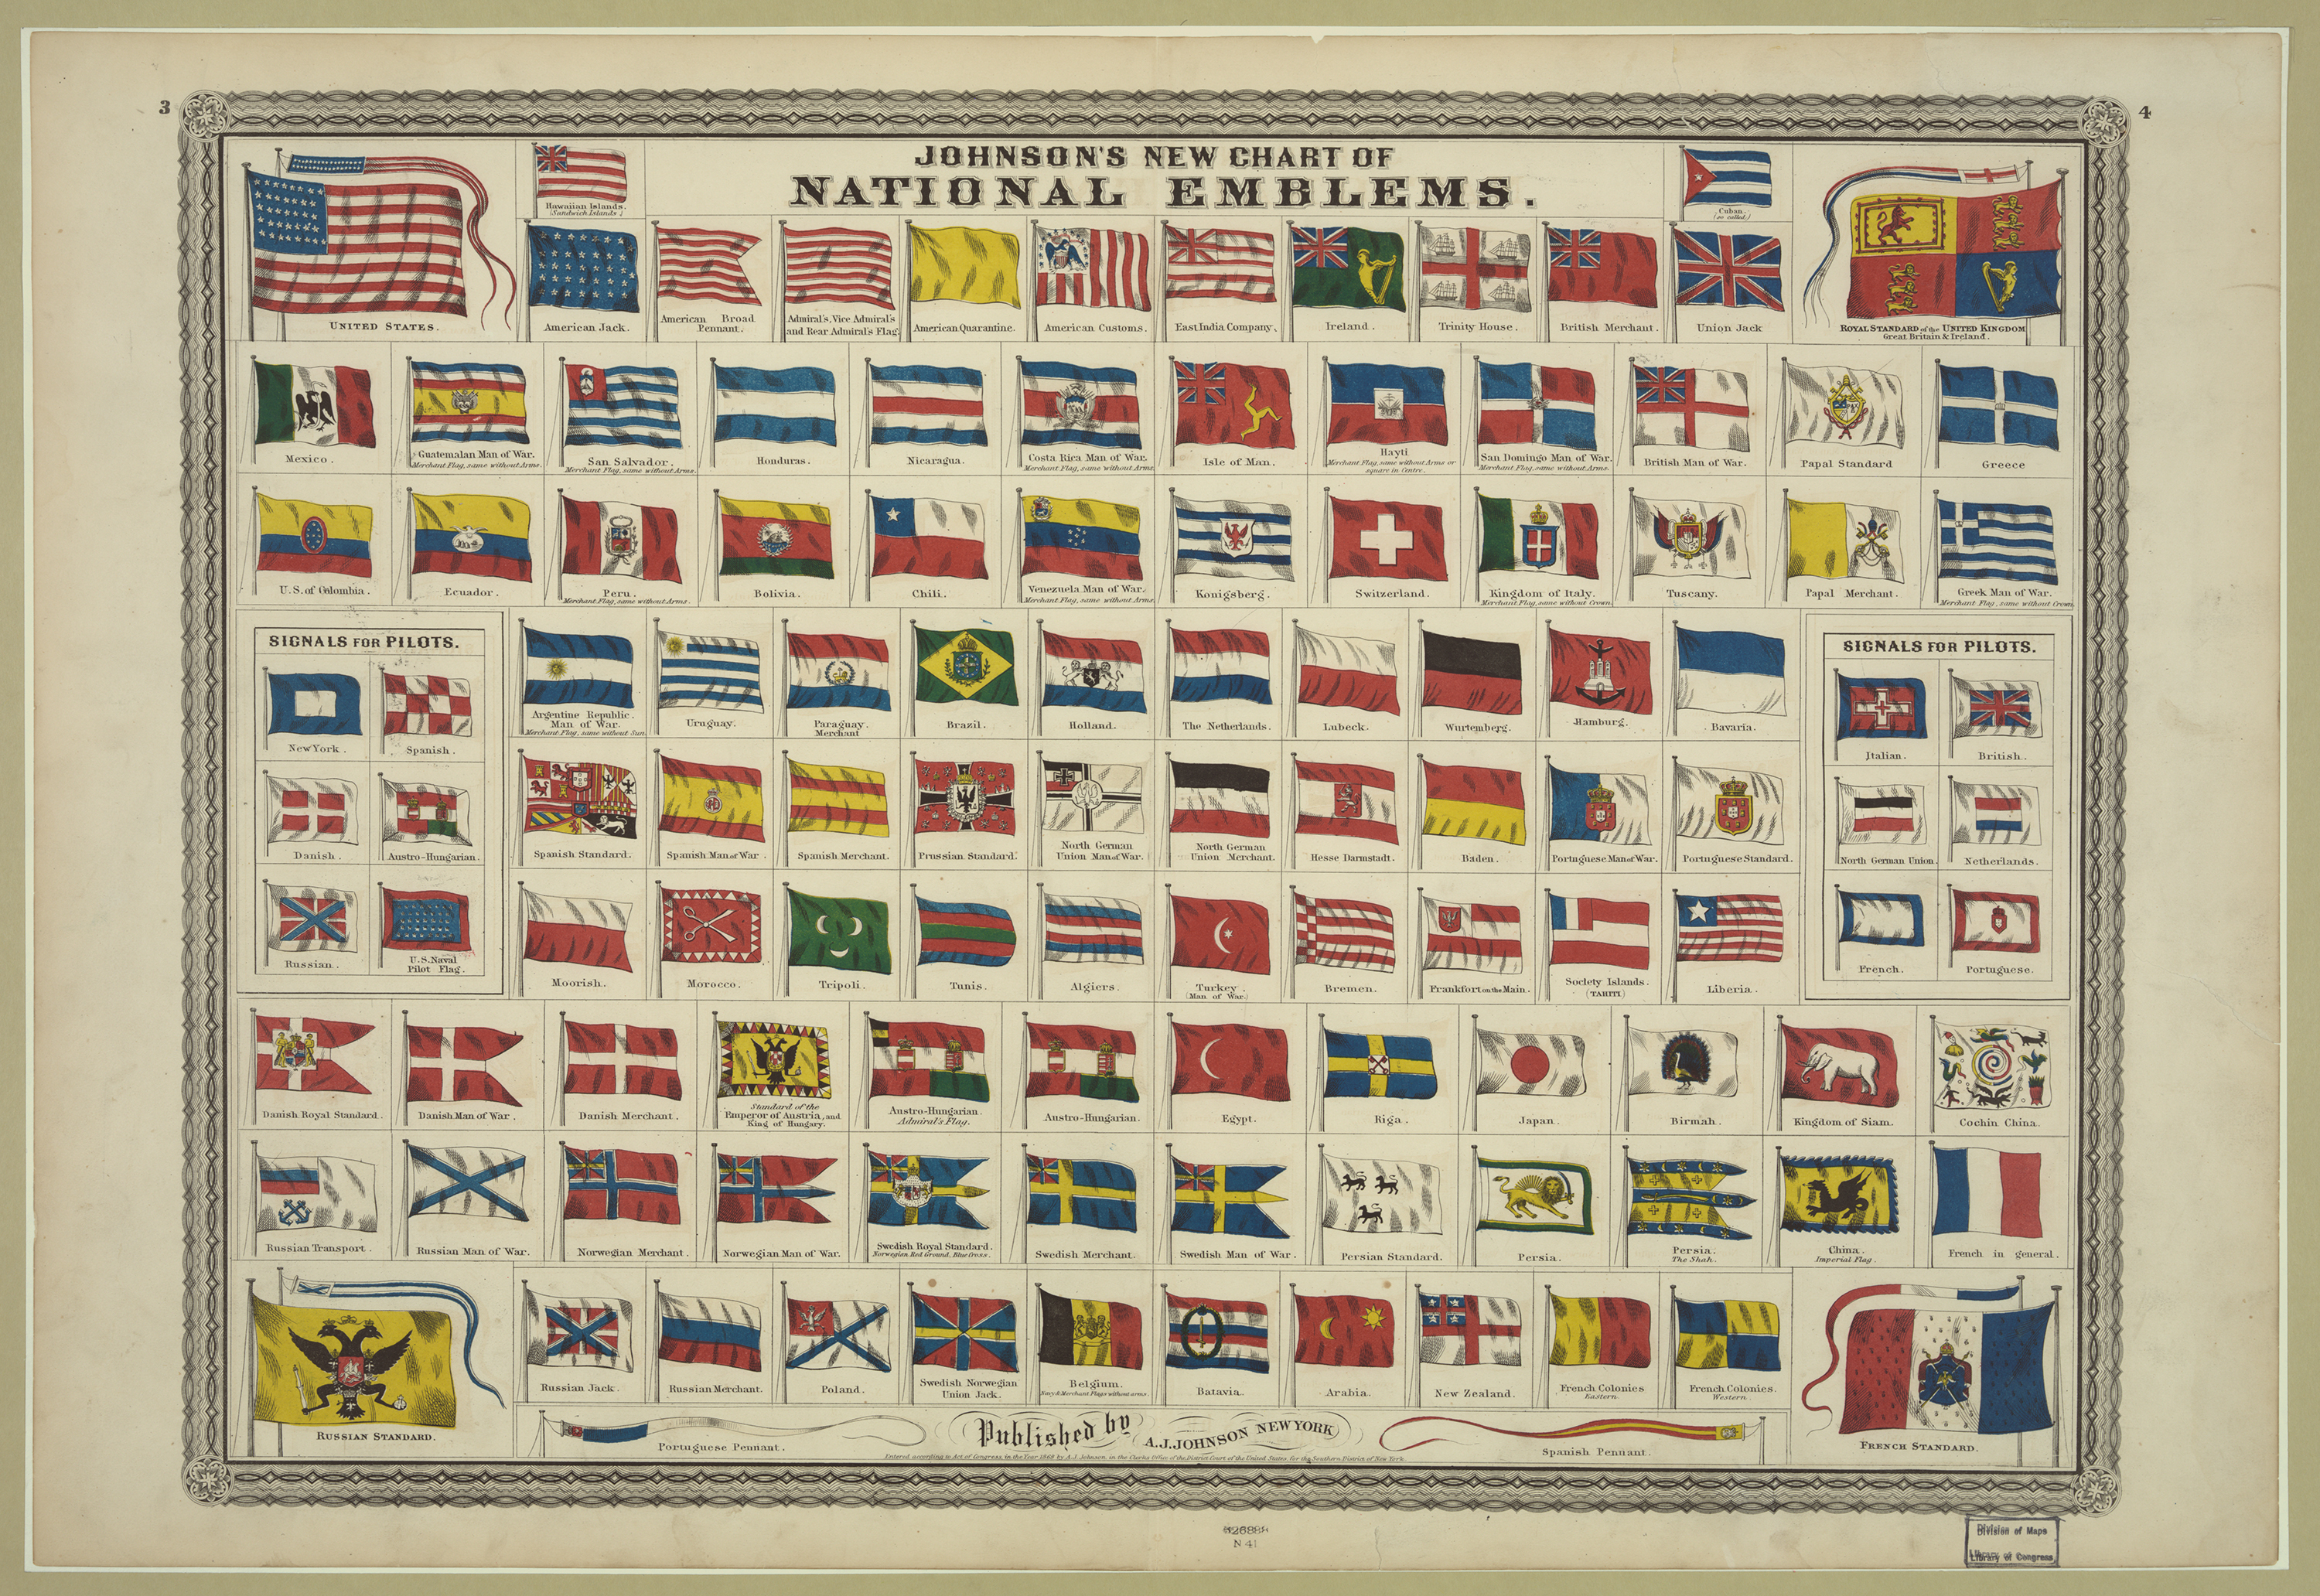 Johnson's new chart of national emblems (ca. 1868).